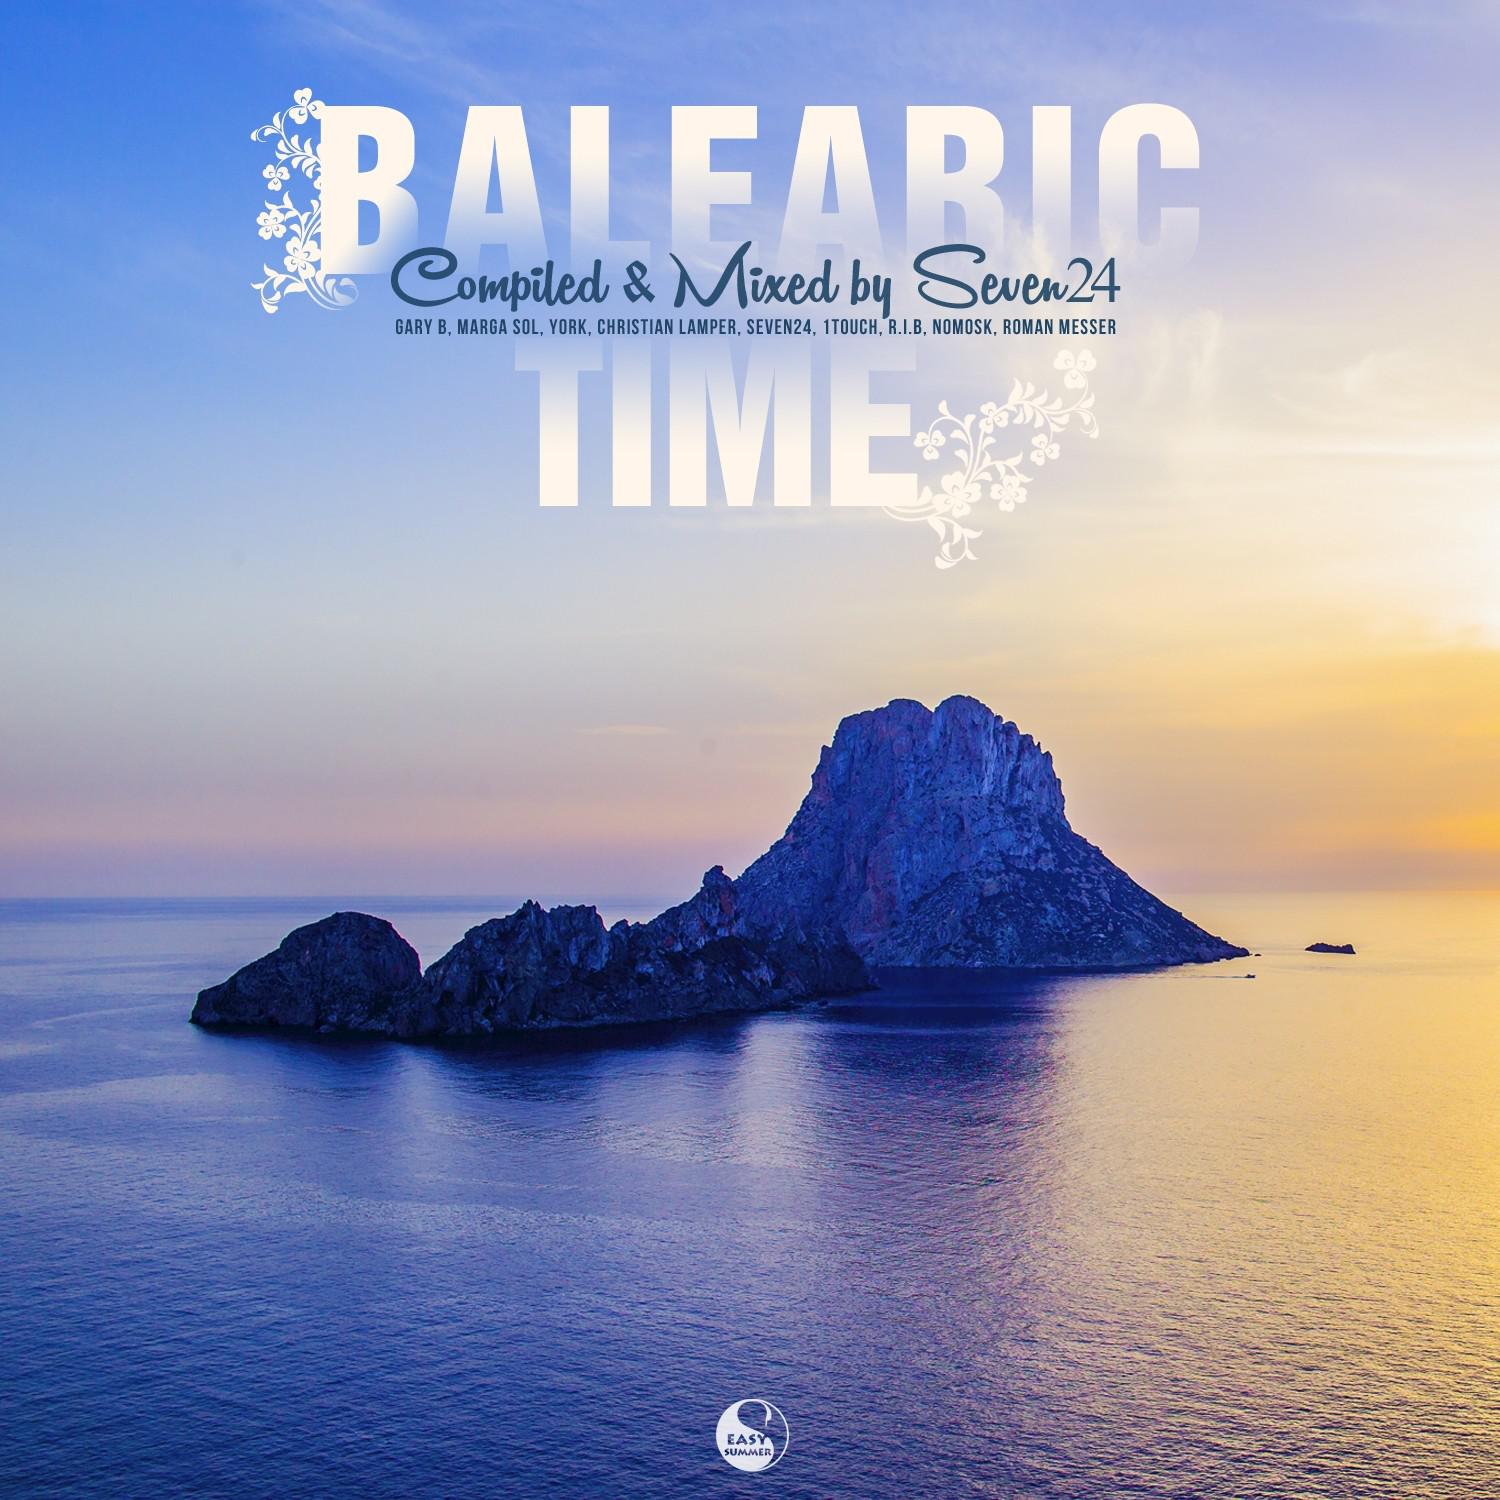 Balearic Time (Continious DJ Mix)